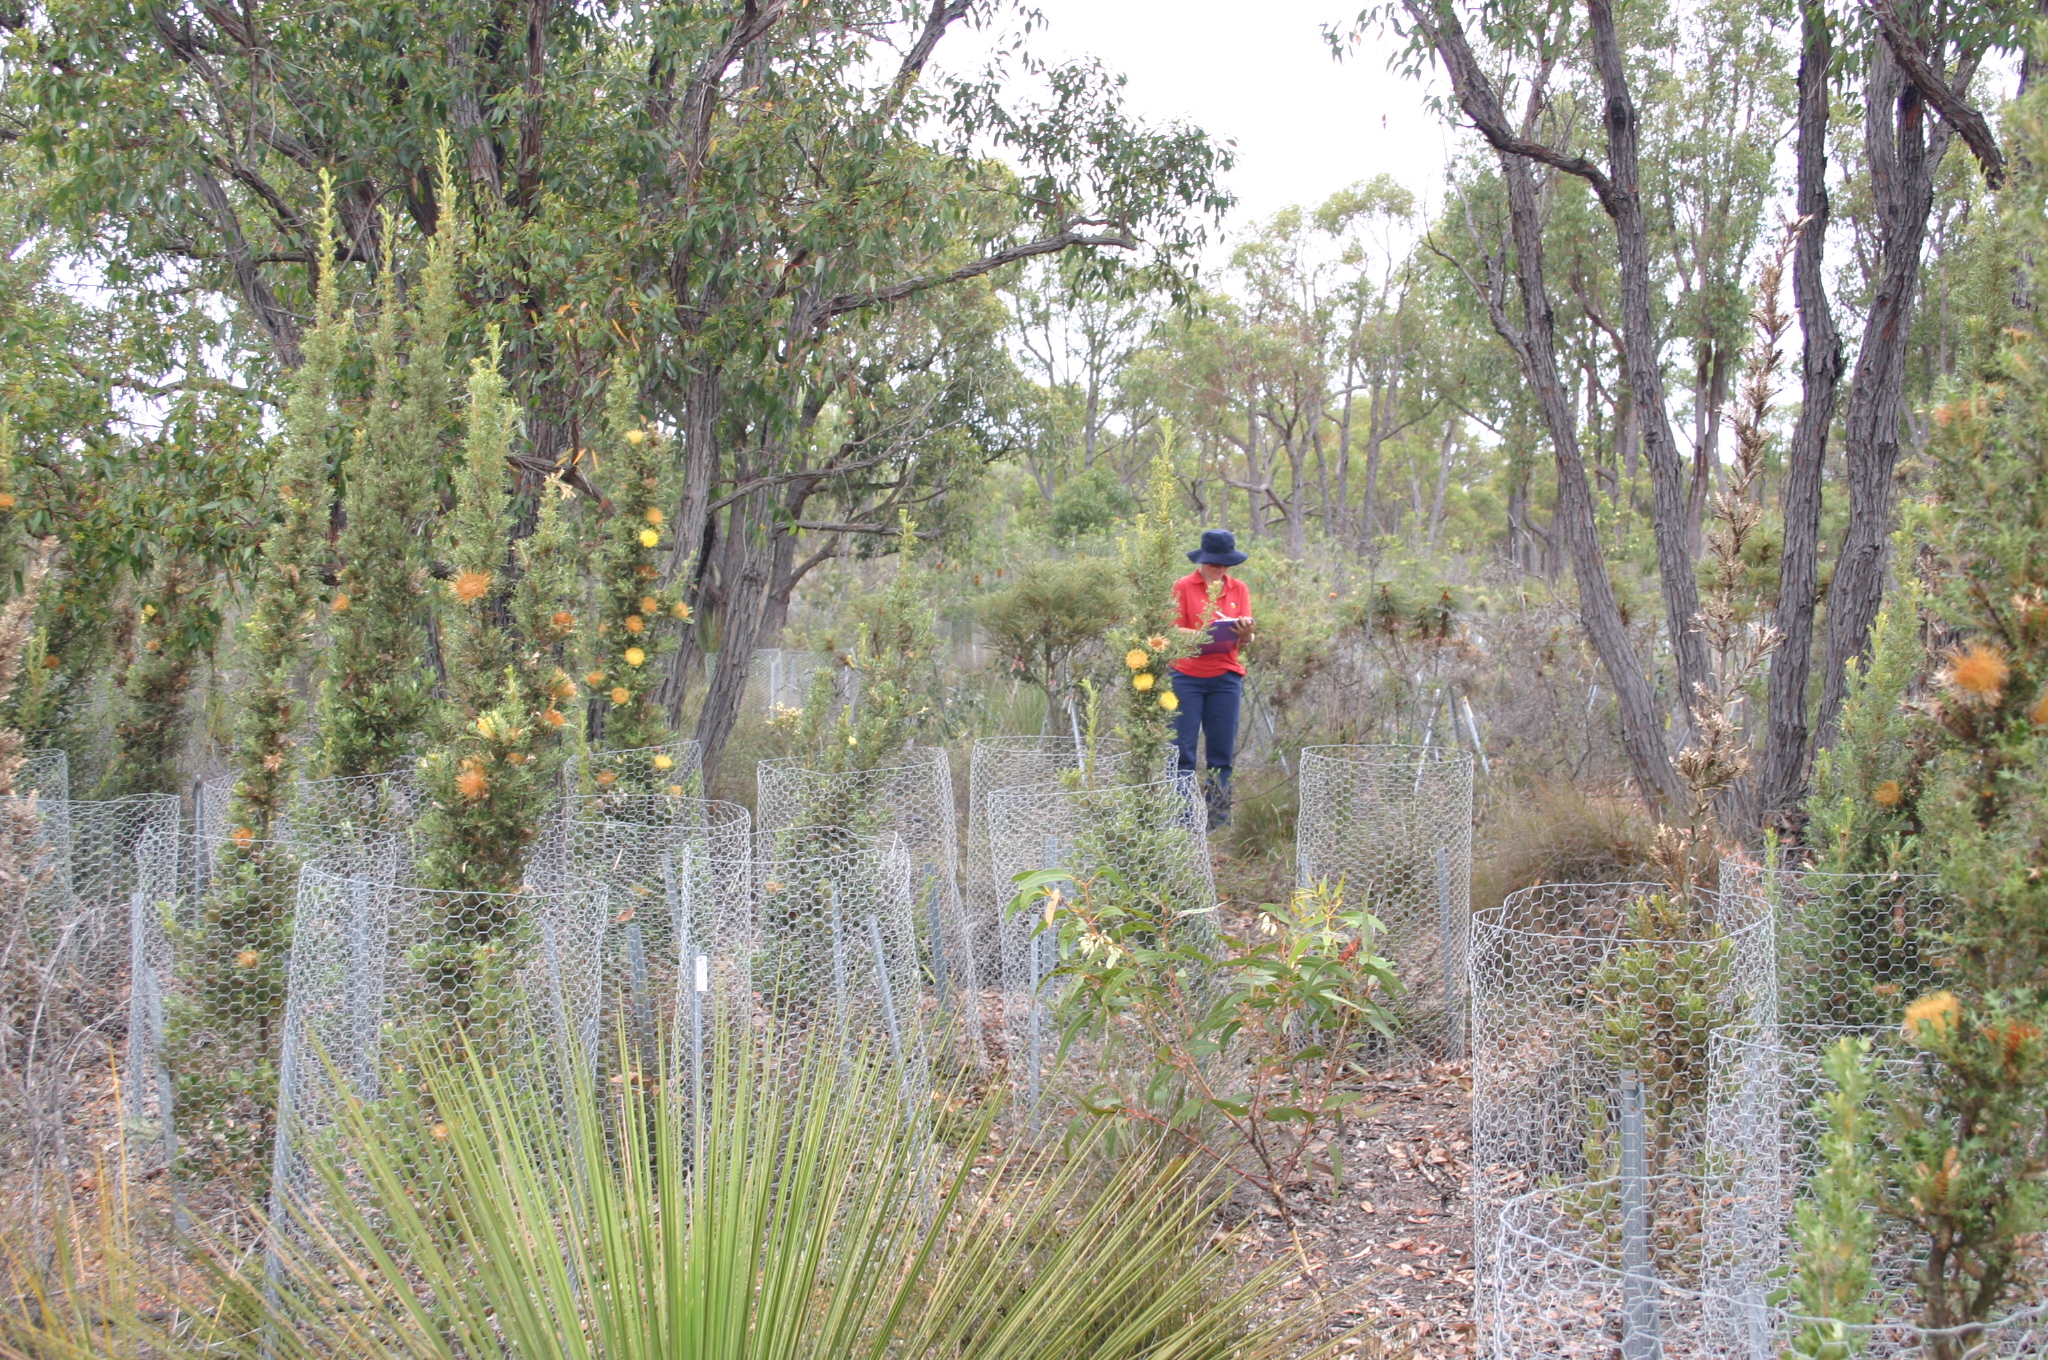 Cactus Dryandra (Banksia anatona) translocation site in Western Australia